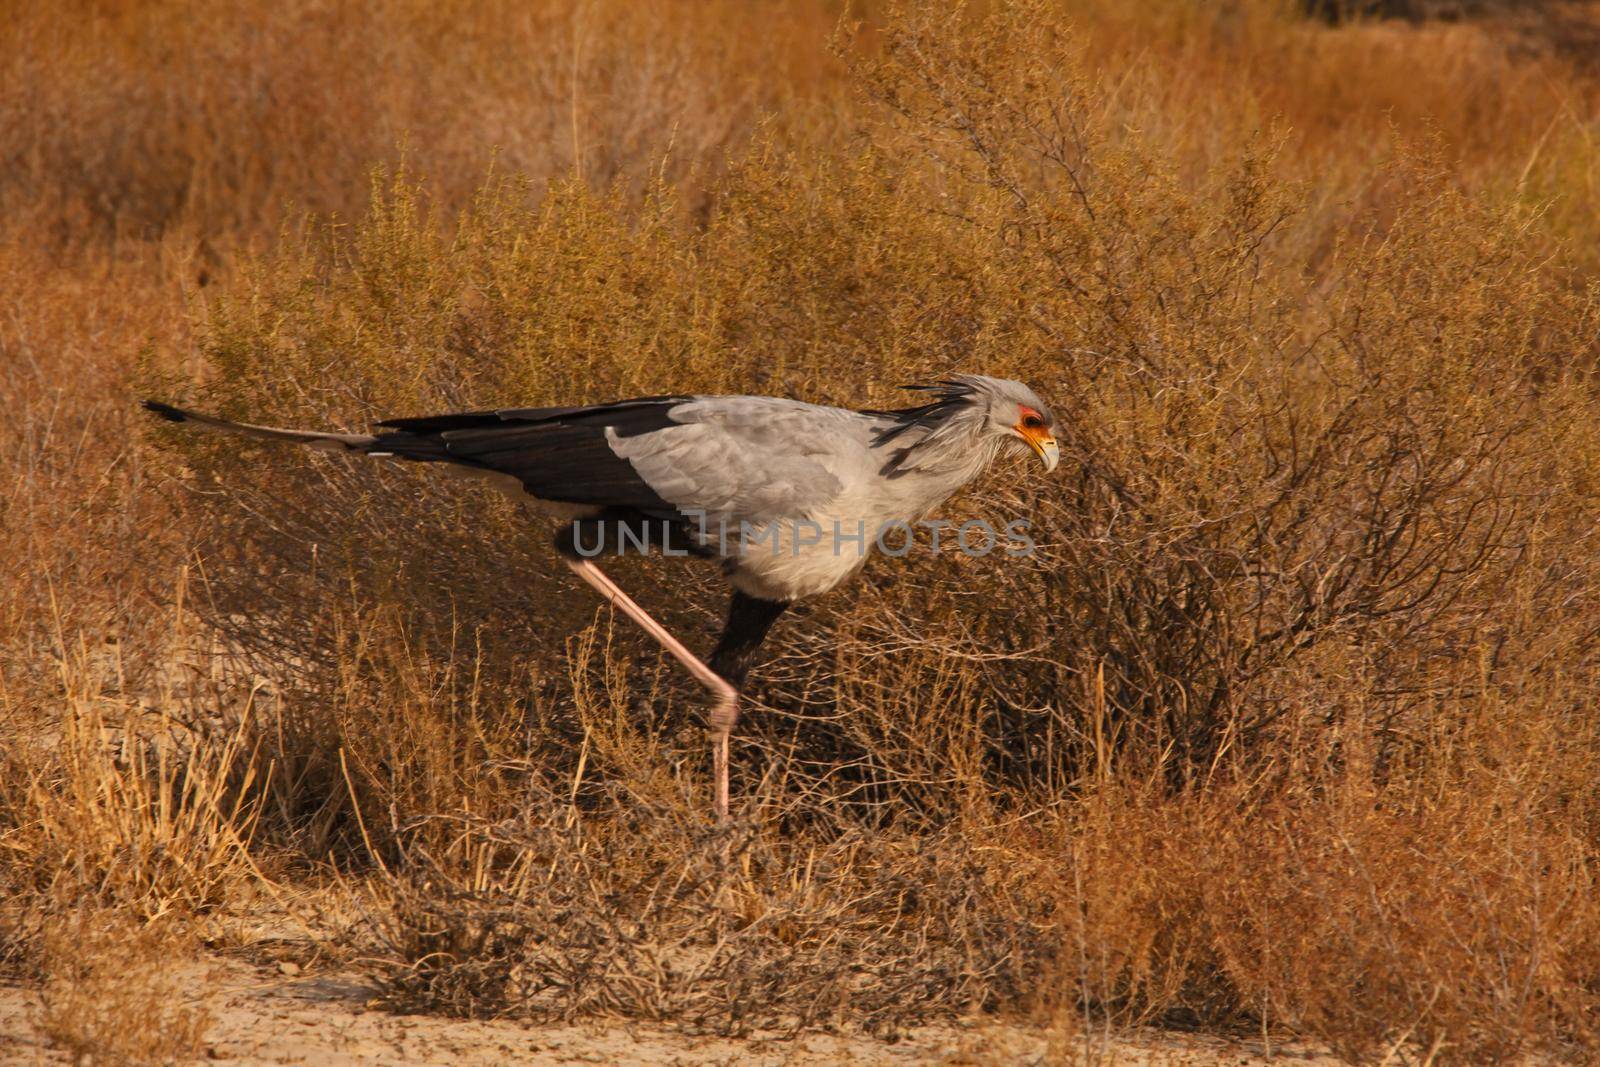 A lone Secretary bird (Sagittarius serpentarius) on patrol in the Kgalagadi Transfrontier Park